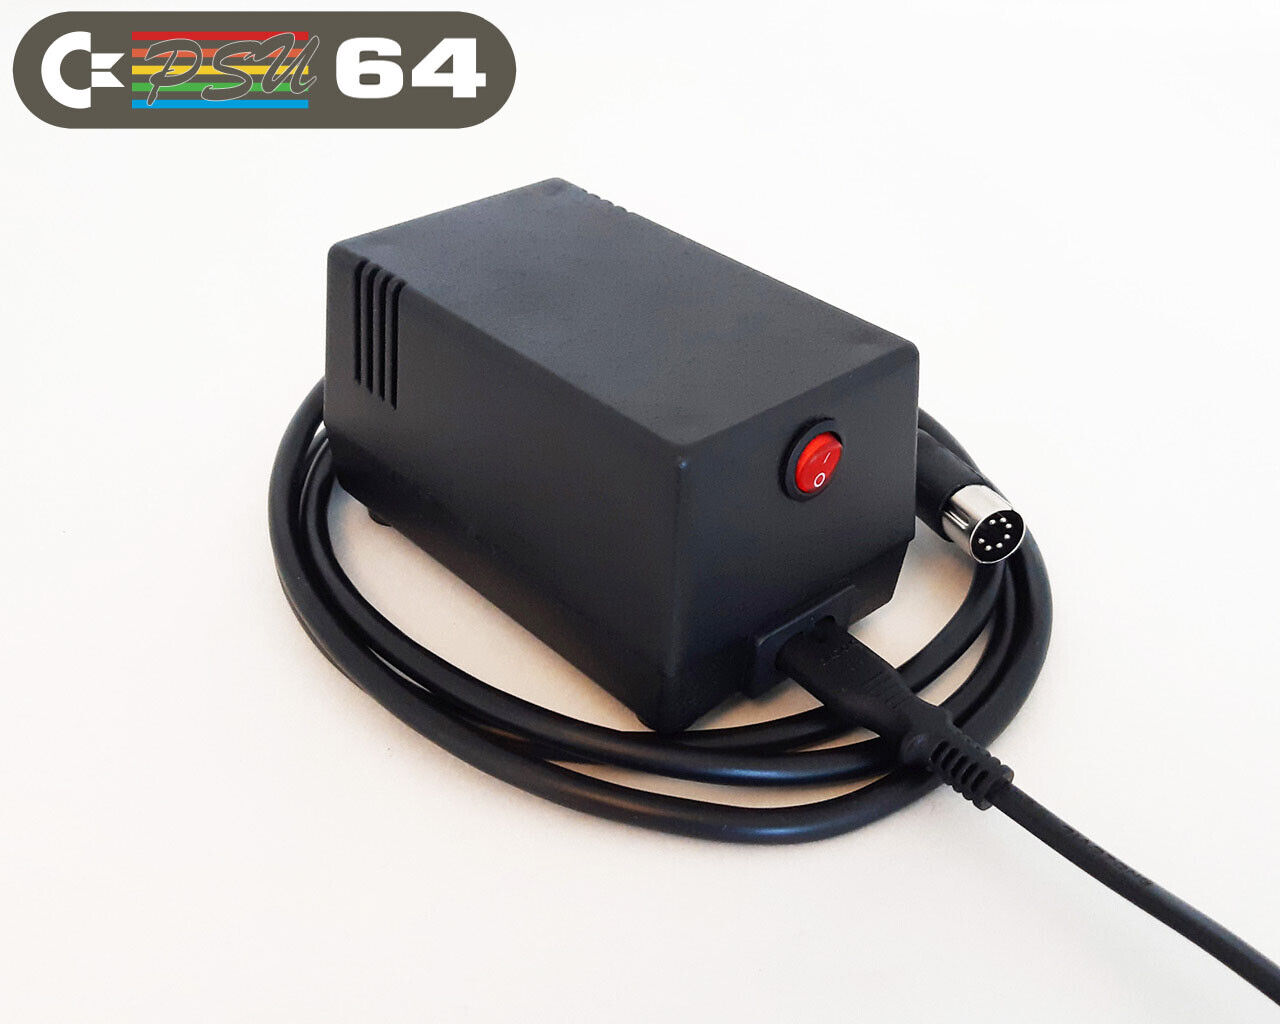 C64 PSU - Commodore 64 Power Supply - Black, LED, Power Switch (US plug)